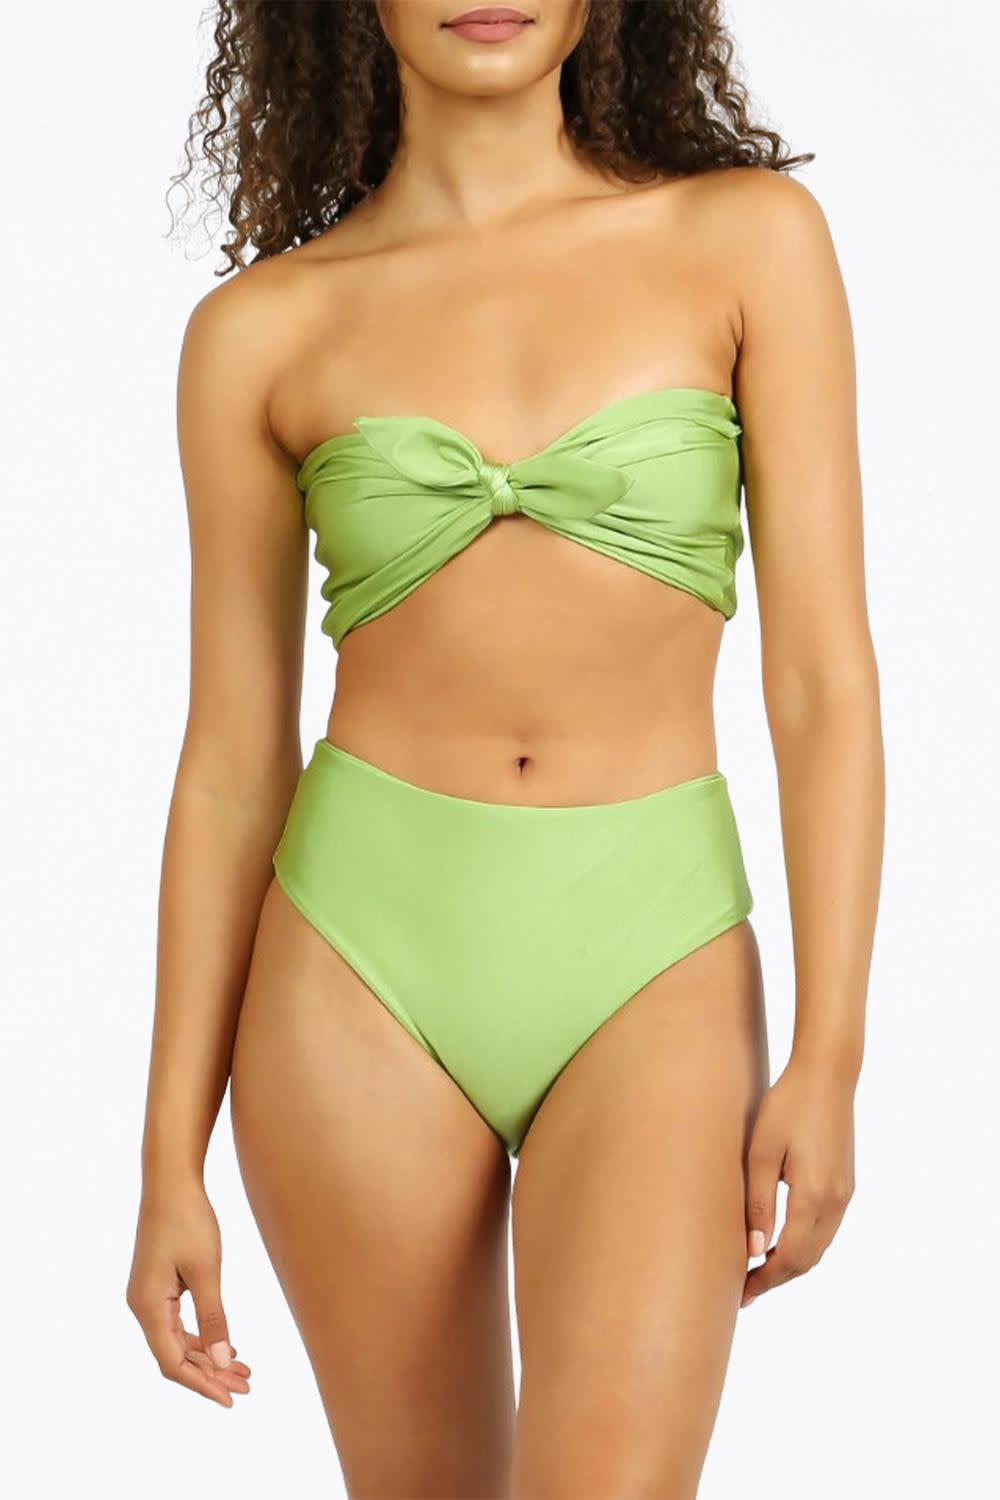 NIRVANIC - Belize Strapless Bandeau Bikini Top